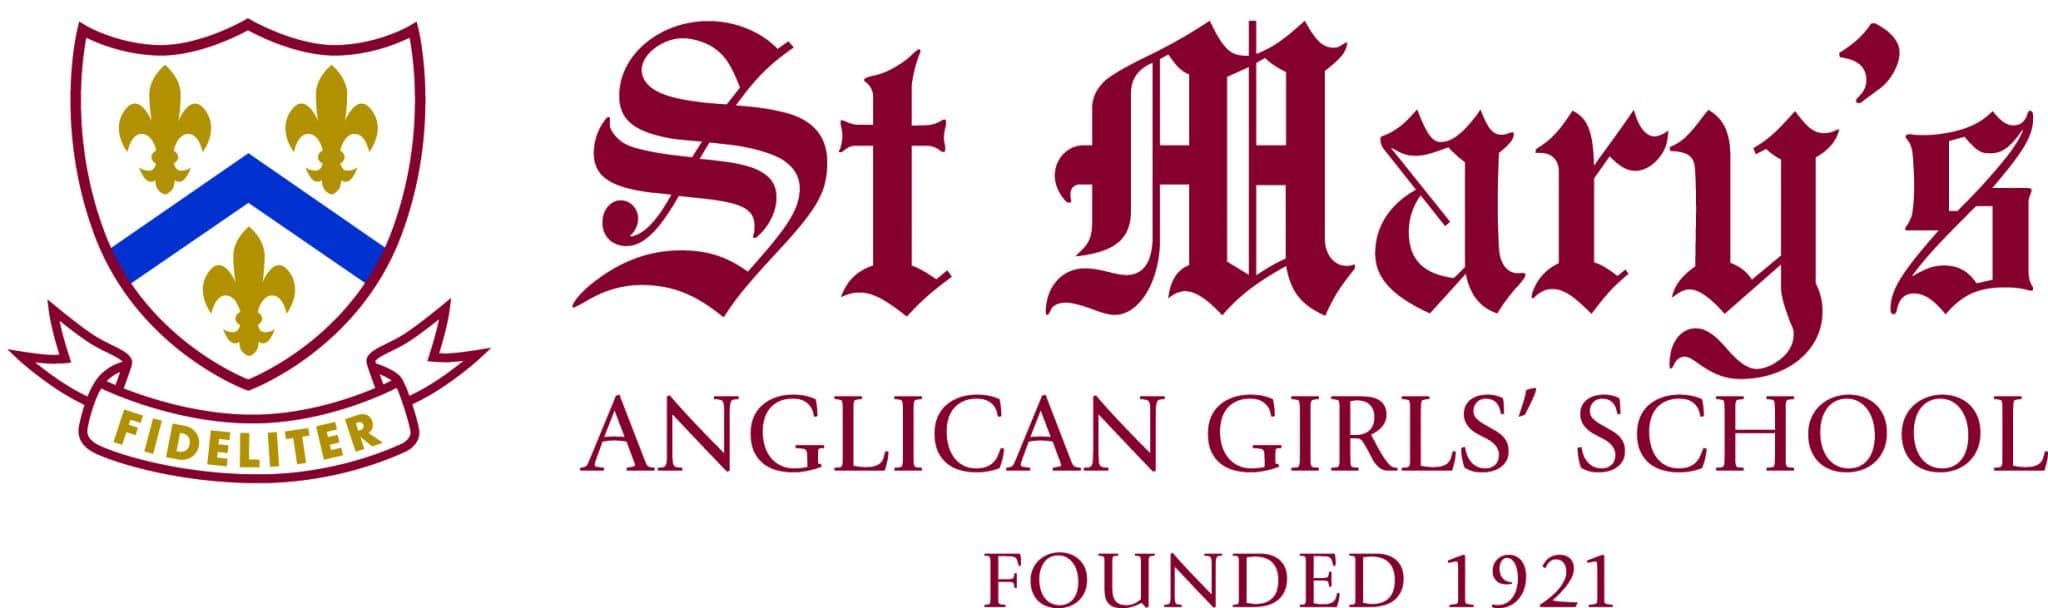 St-Marys-Anglican-Girls-School